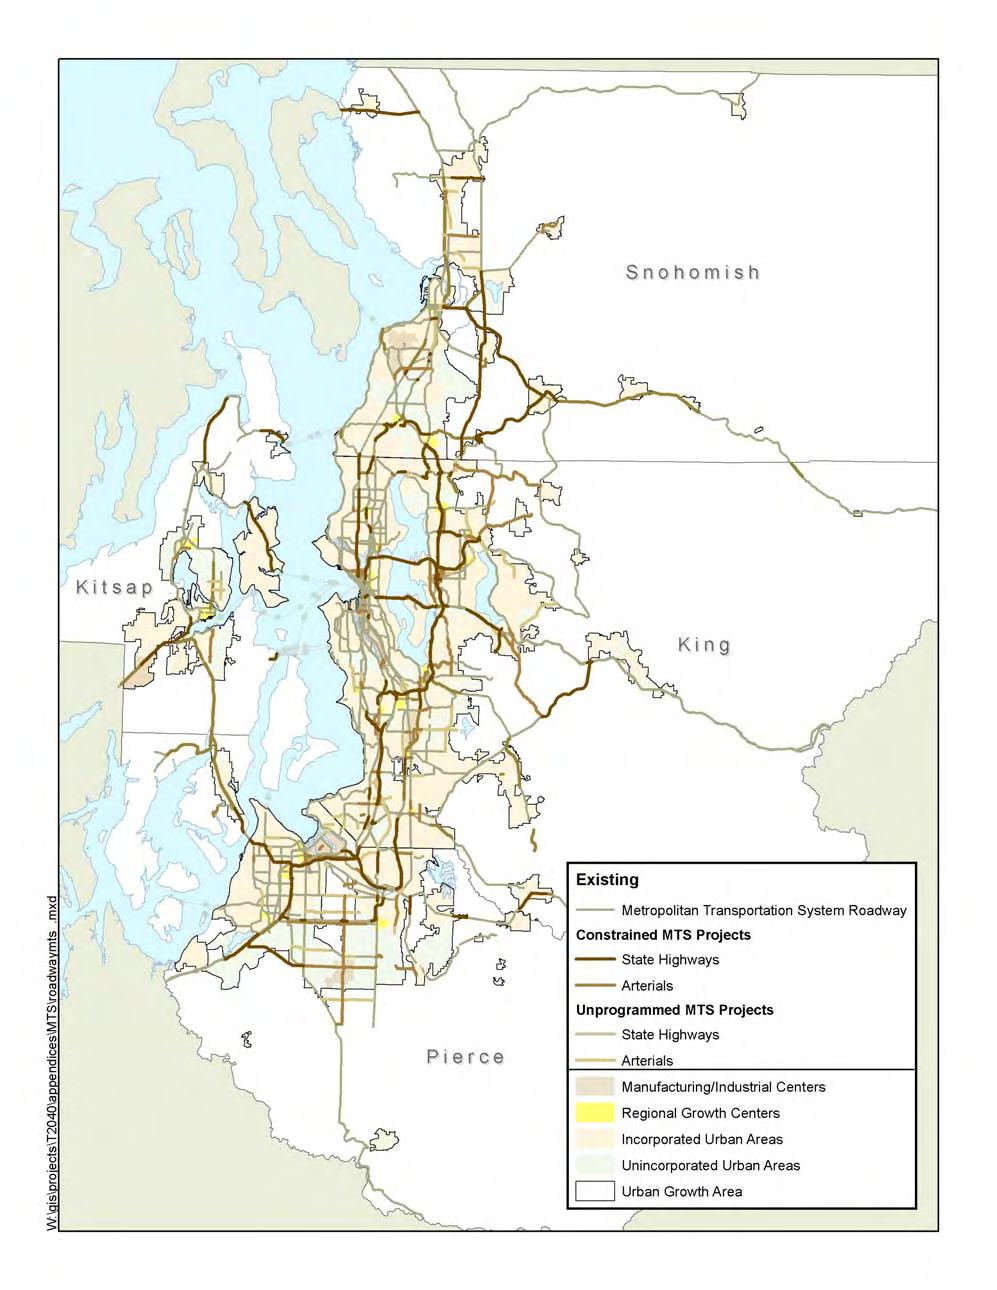 Map D-1: Metropolitan Transportation System (MTS) Roadway